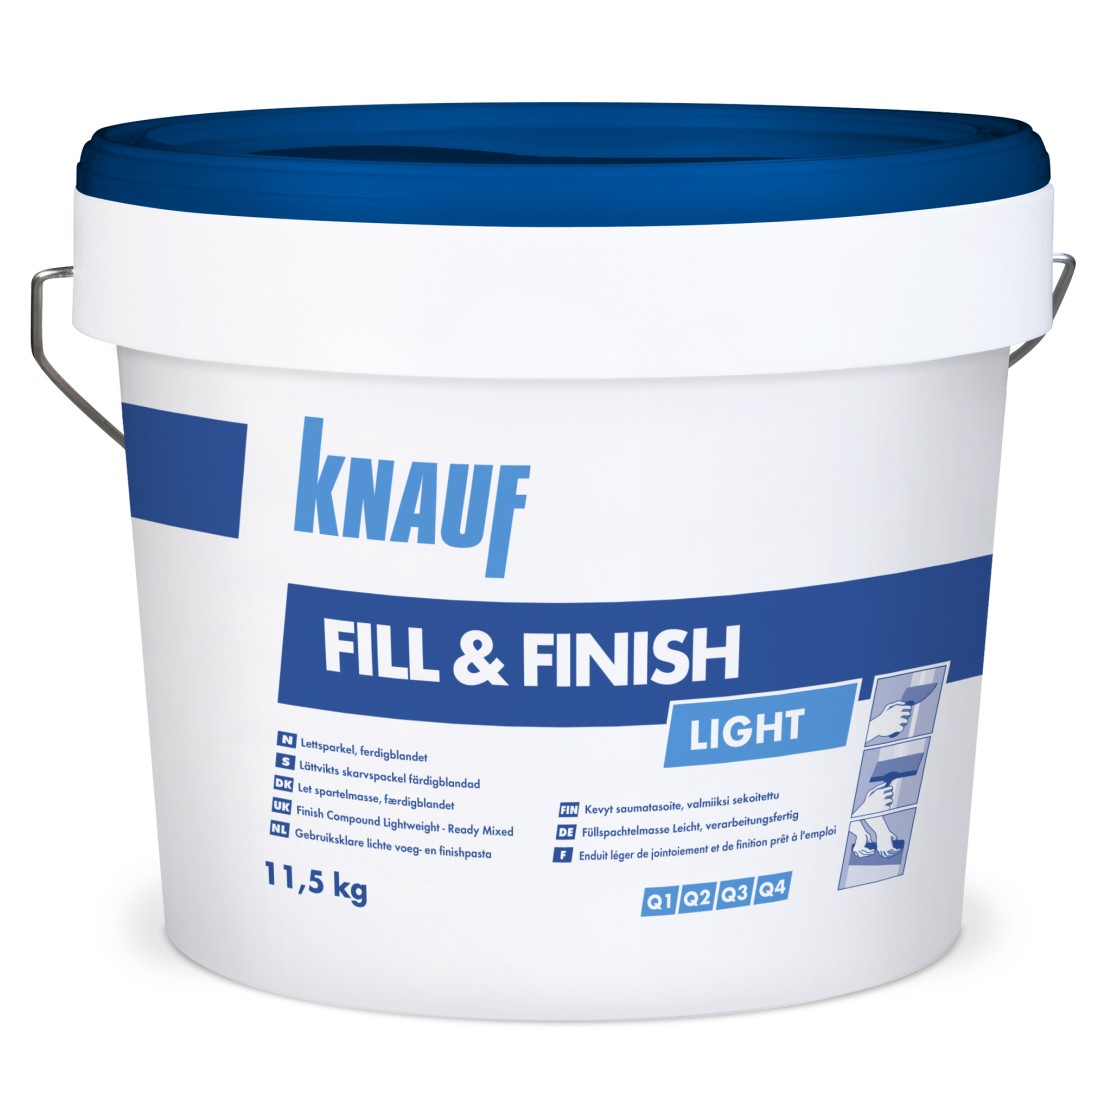 Knauf & Finish Light 20kg